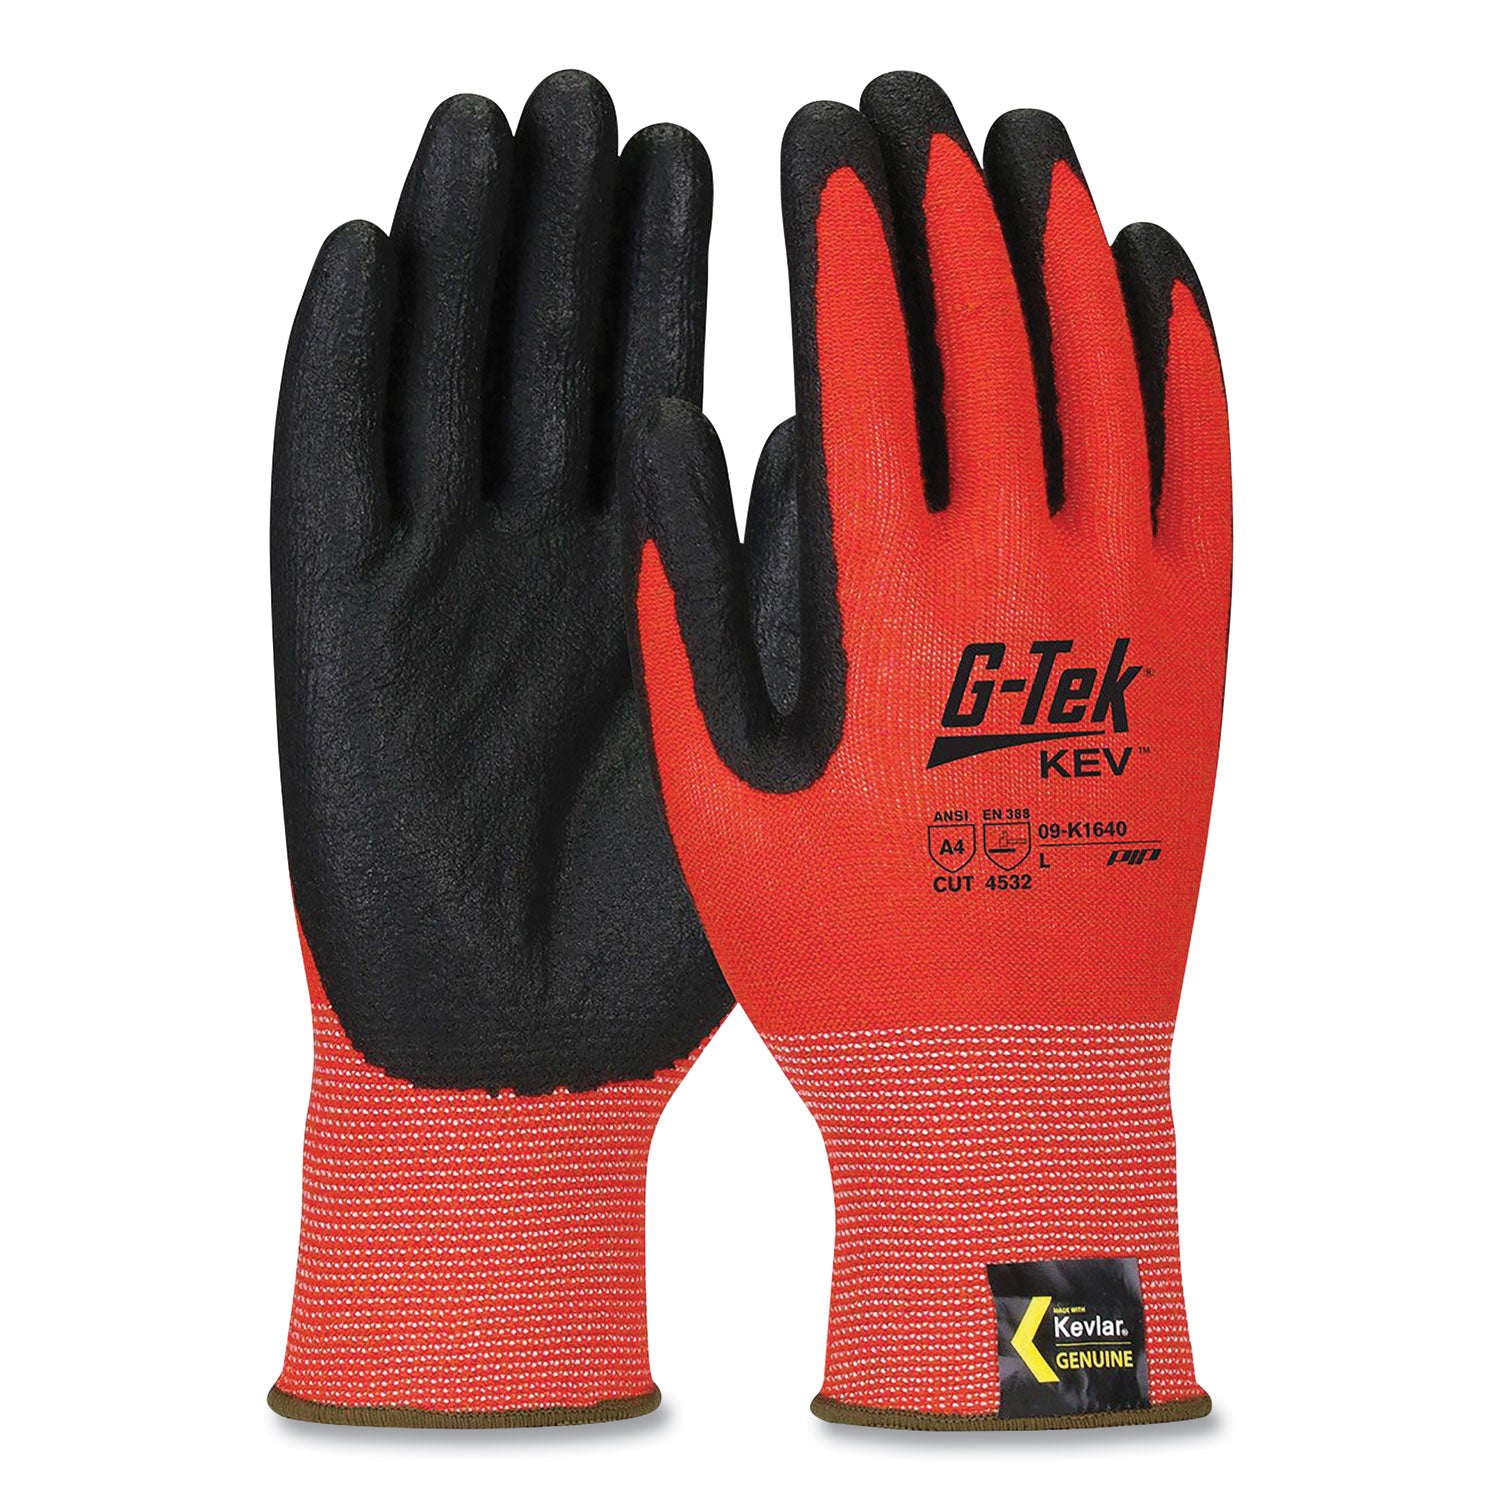 kev-hi-vis-seamless-knit-kevlar-gloves-2x-large-red-black_pid09k1640xxl - 1